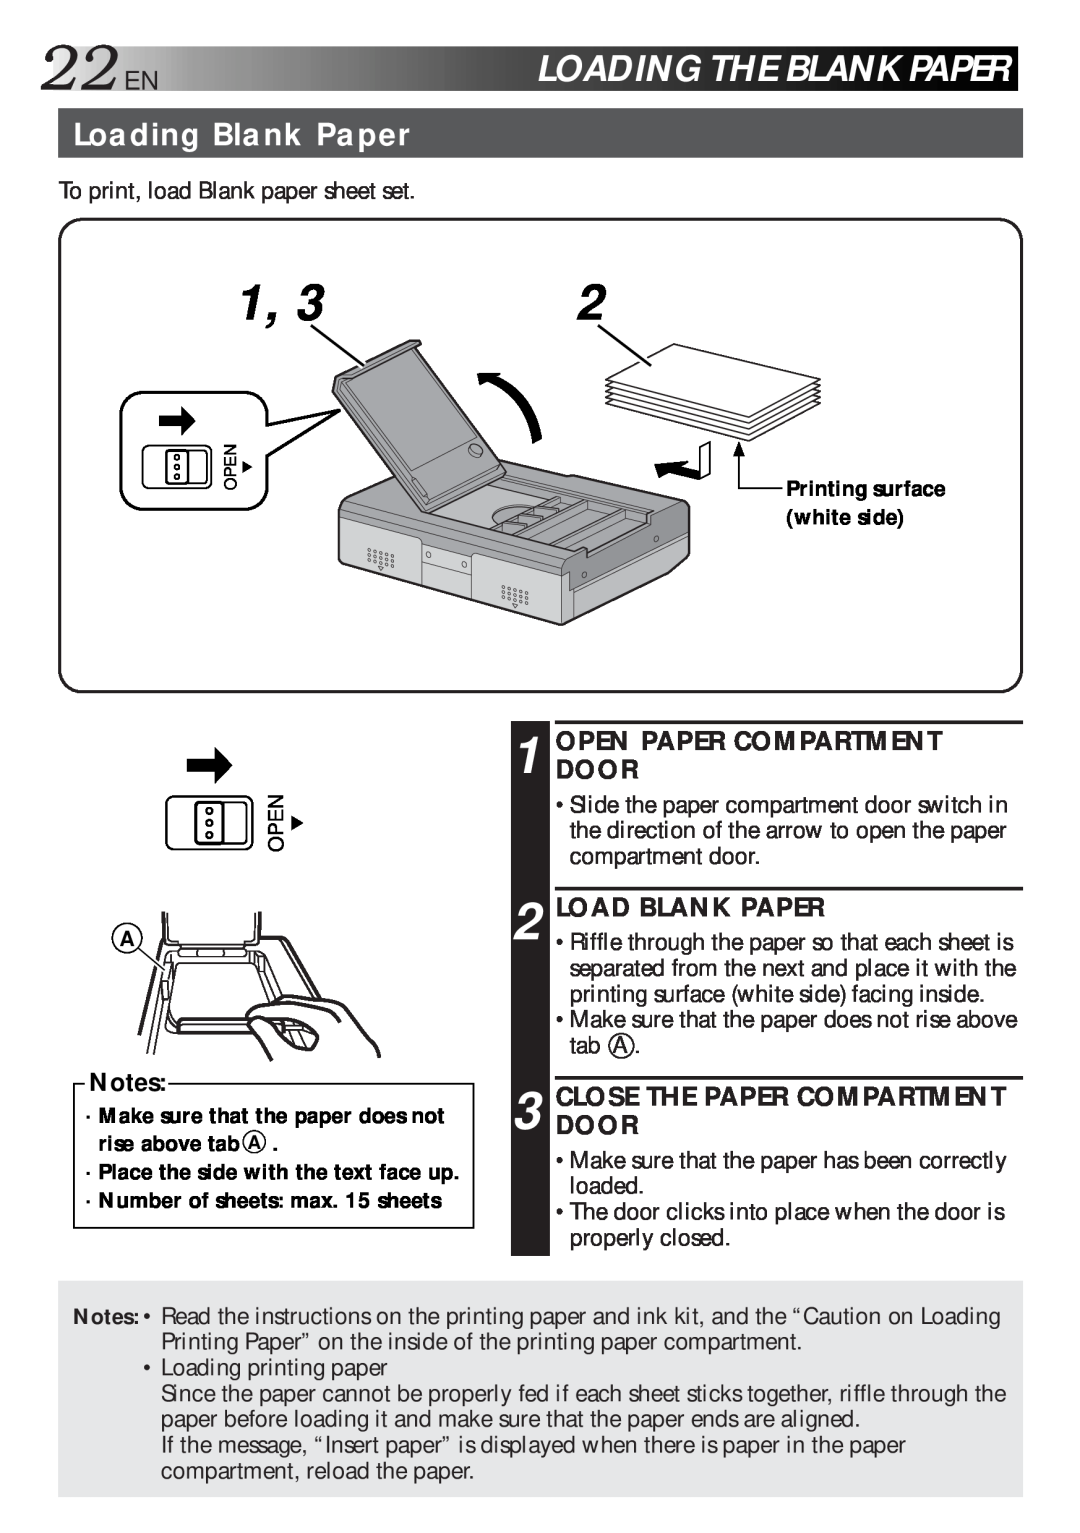 JVC GV-HT1U manual 22EN LOADINGTHE BLANKPAPER, Loading Blank Paper, Opendoorpaper Compartment, Load Blank Paper 